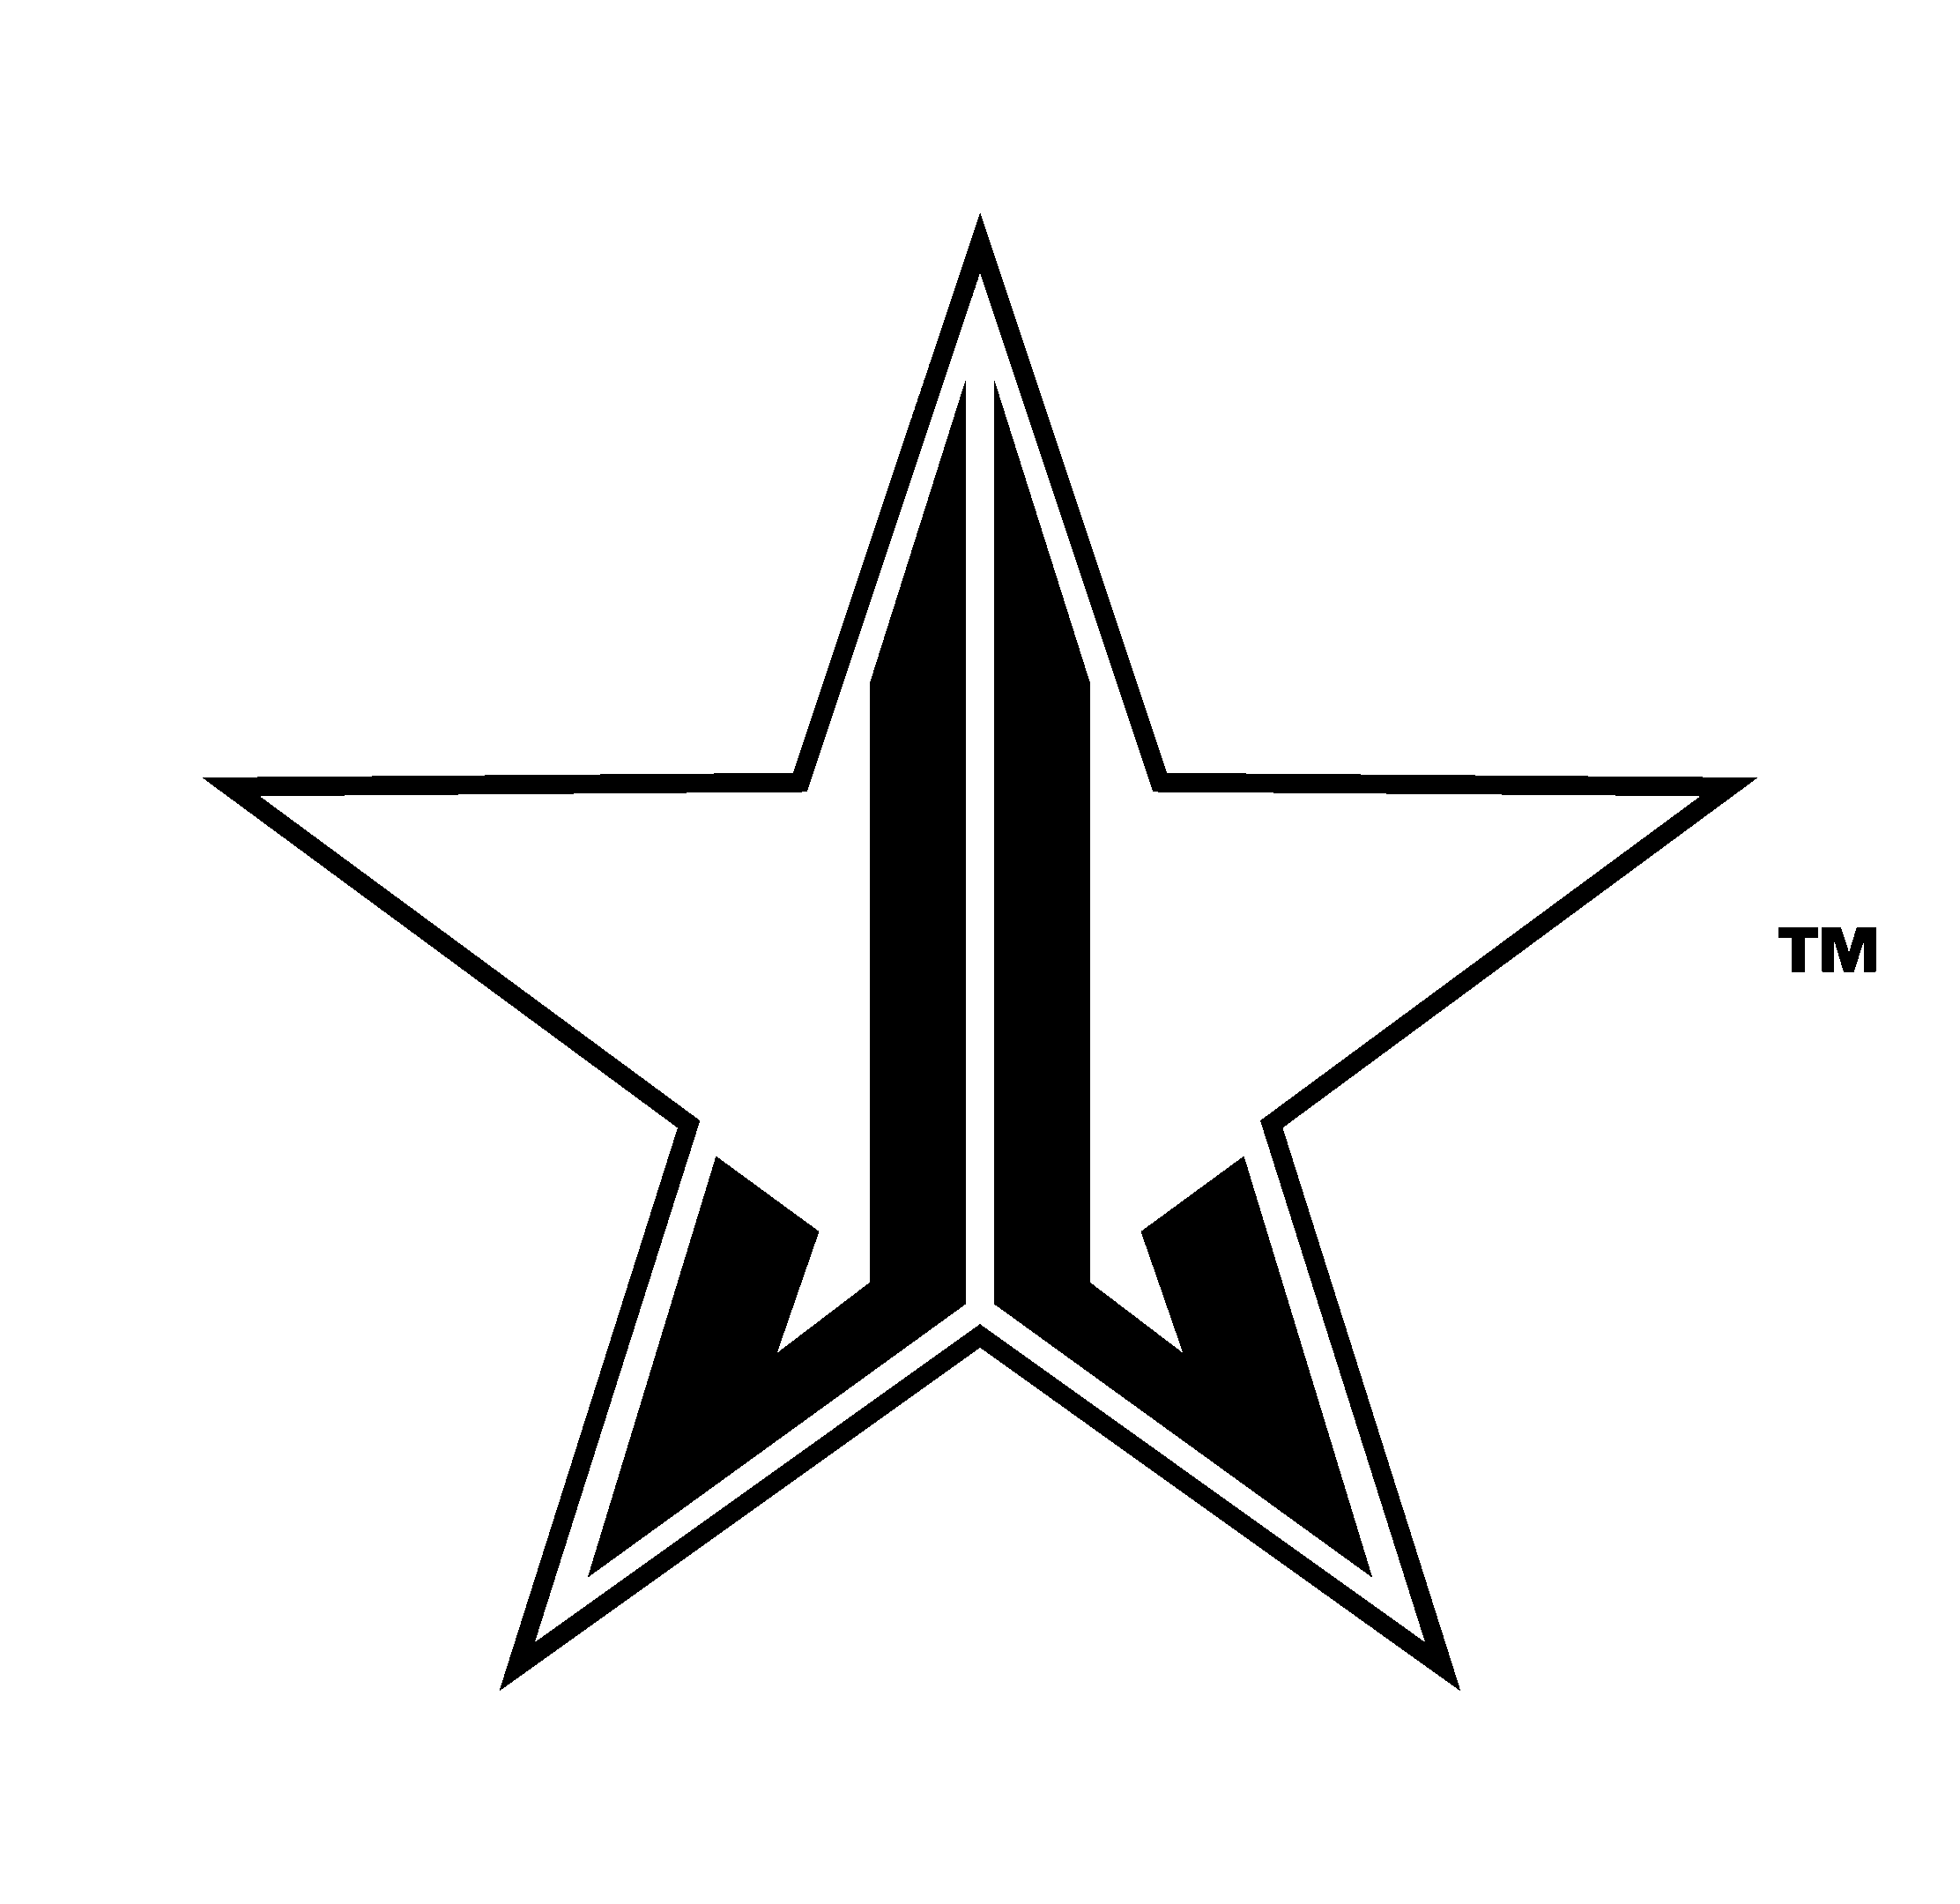 Jeffree Star on X: 💅🏻 The brand new #JeffreeStarCosmetics